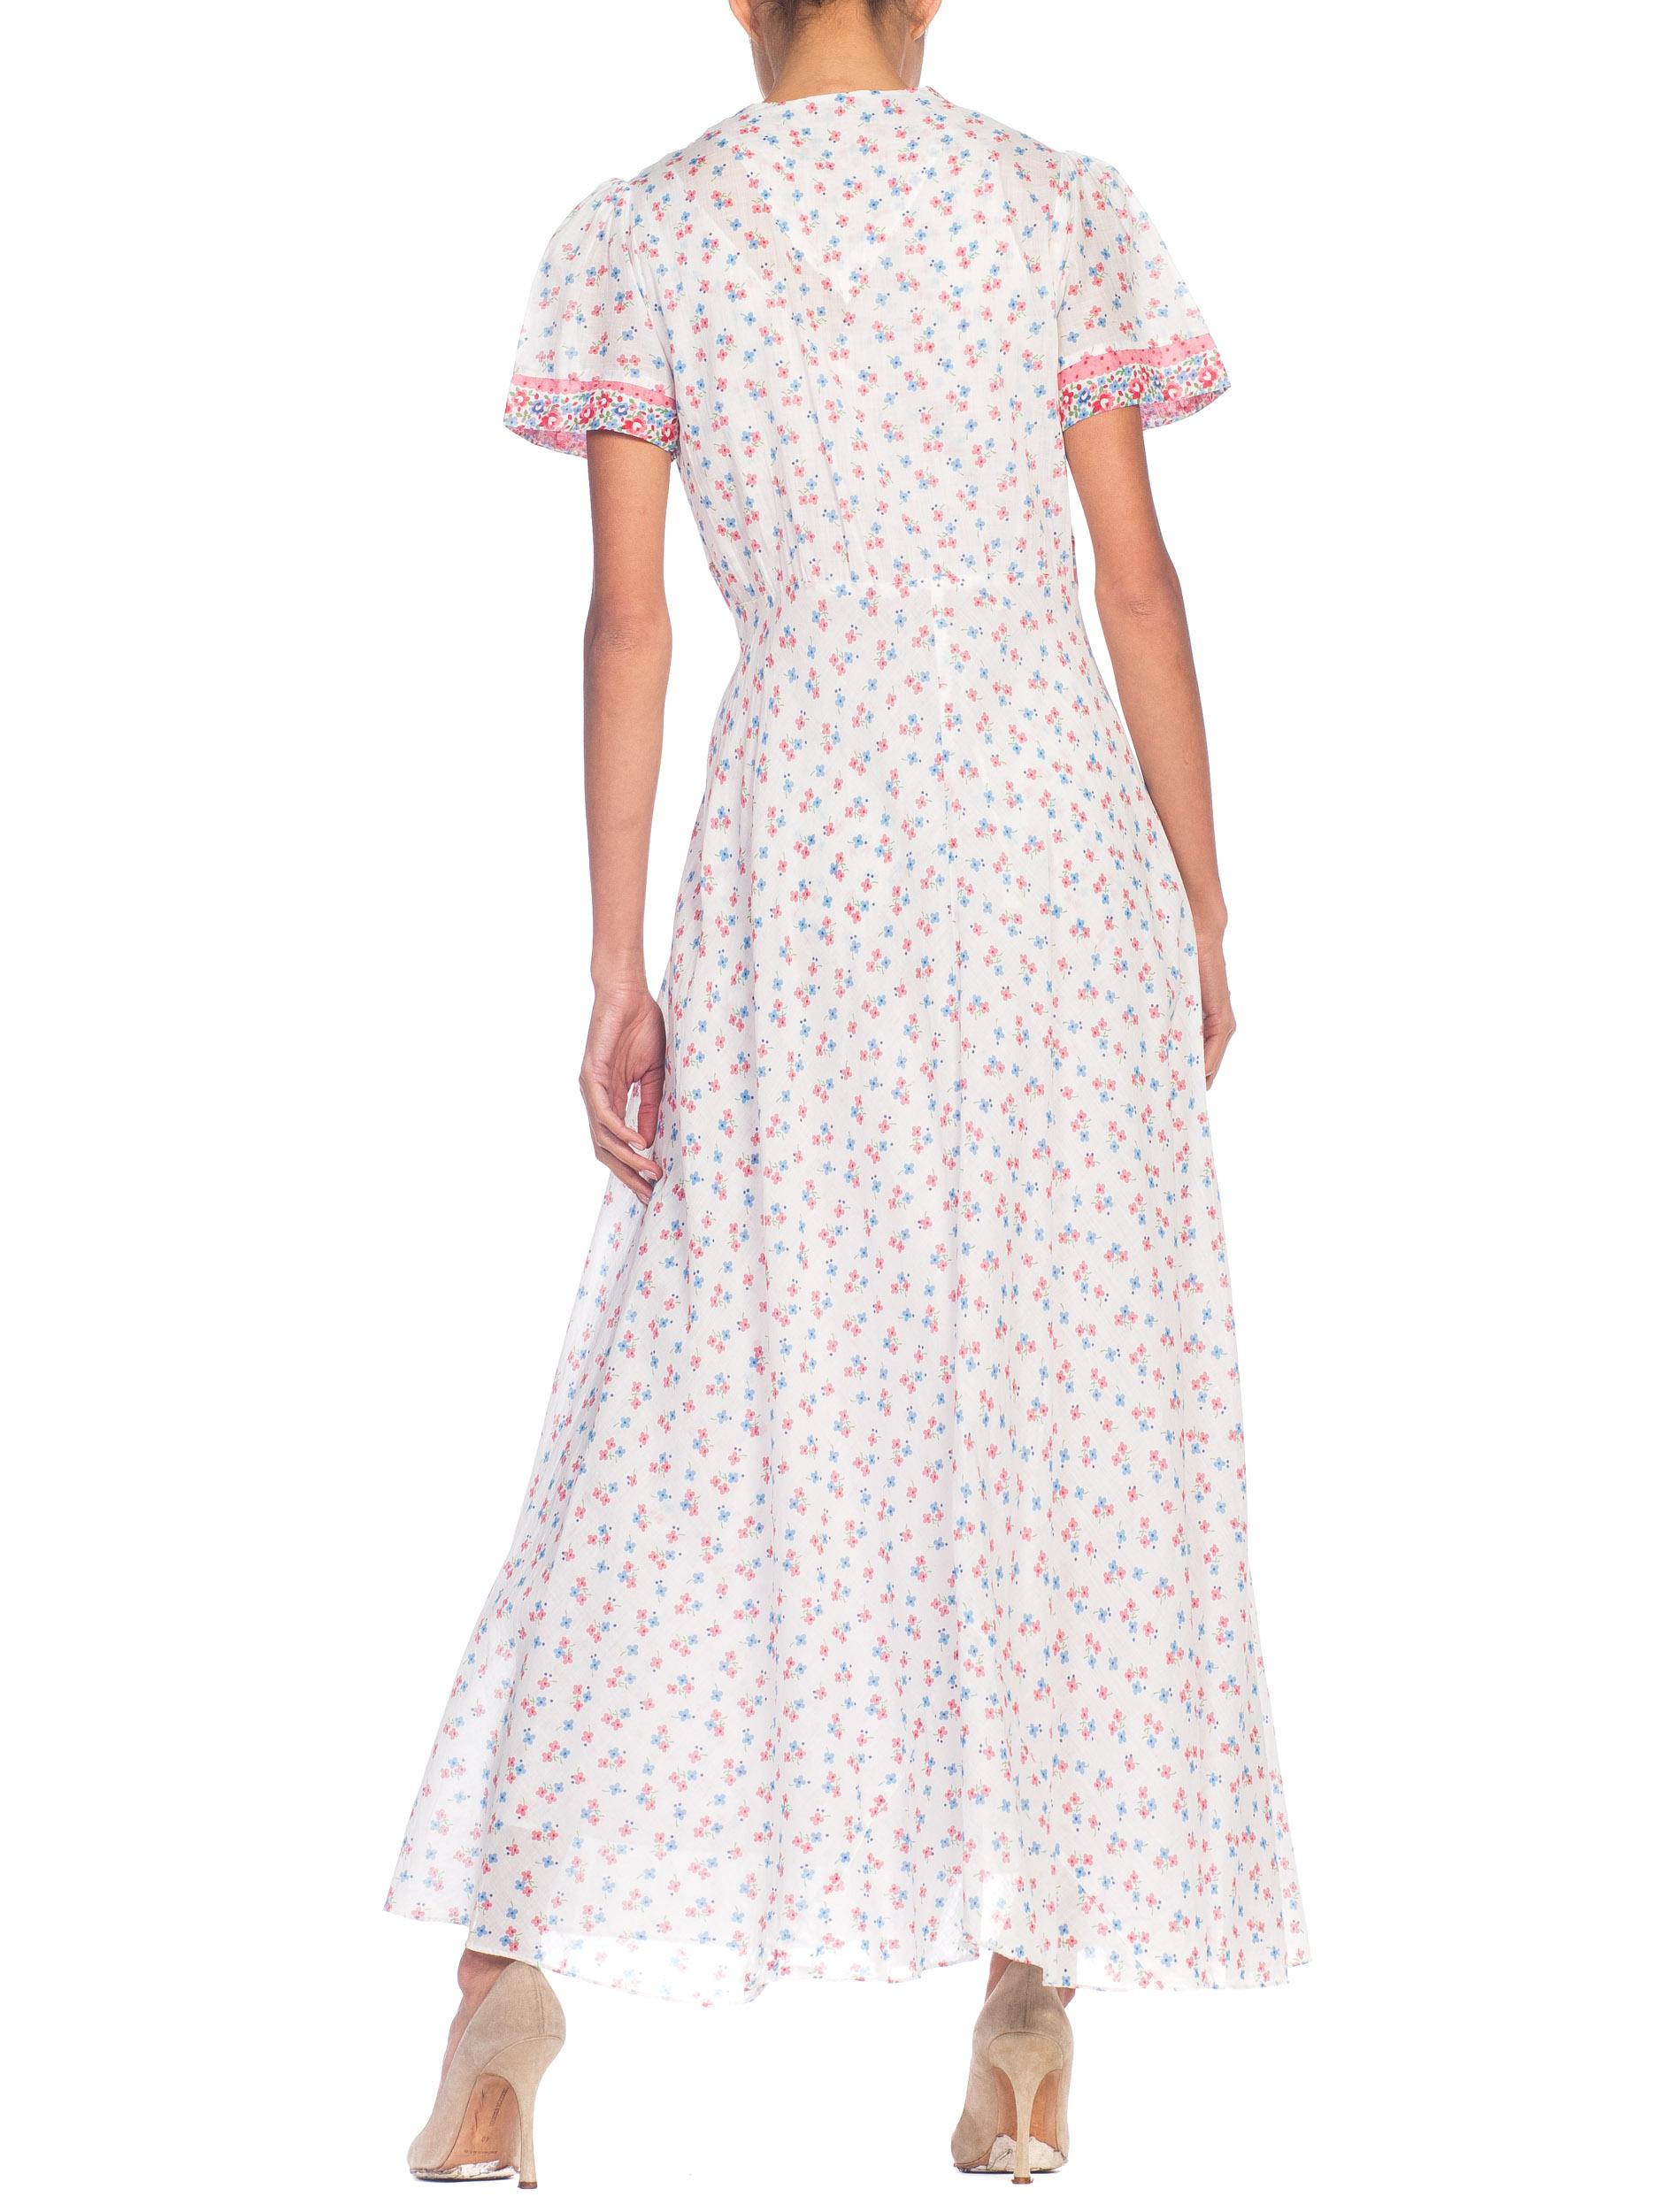 Women's 1930S Pink & Blue Floral Cotton Voile Bias Cut Negligee Slip Dress Robe For Sale